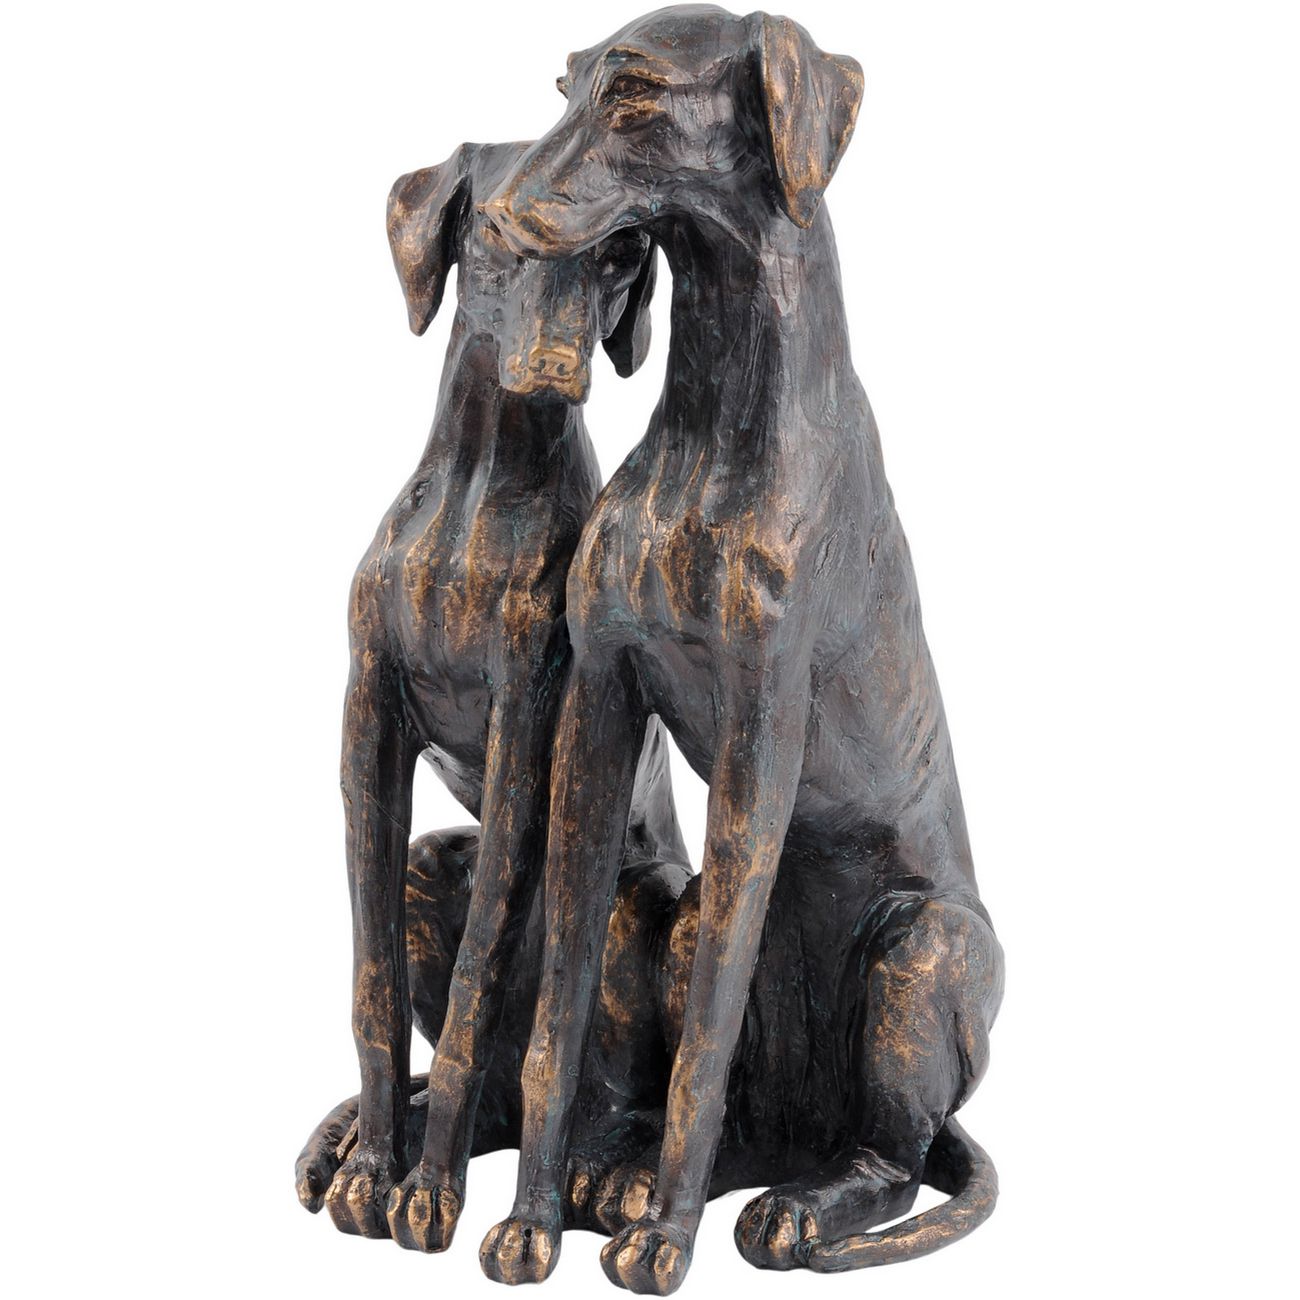 Antique bronze puppy sculpture